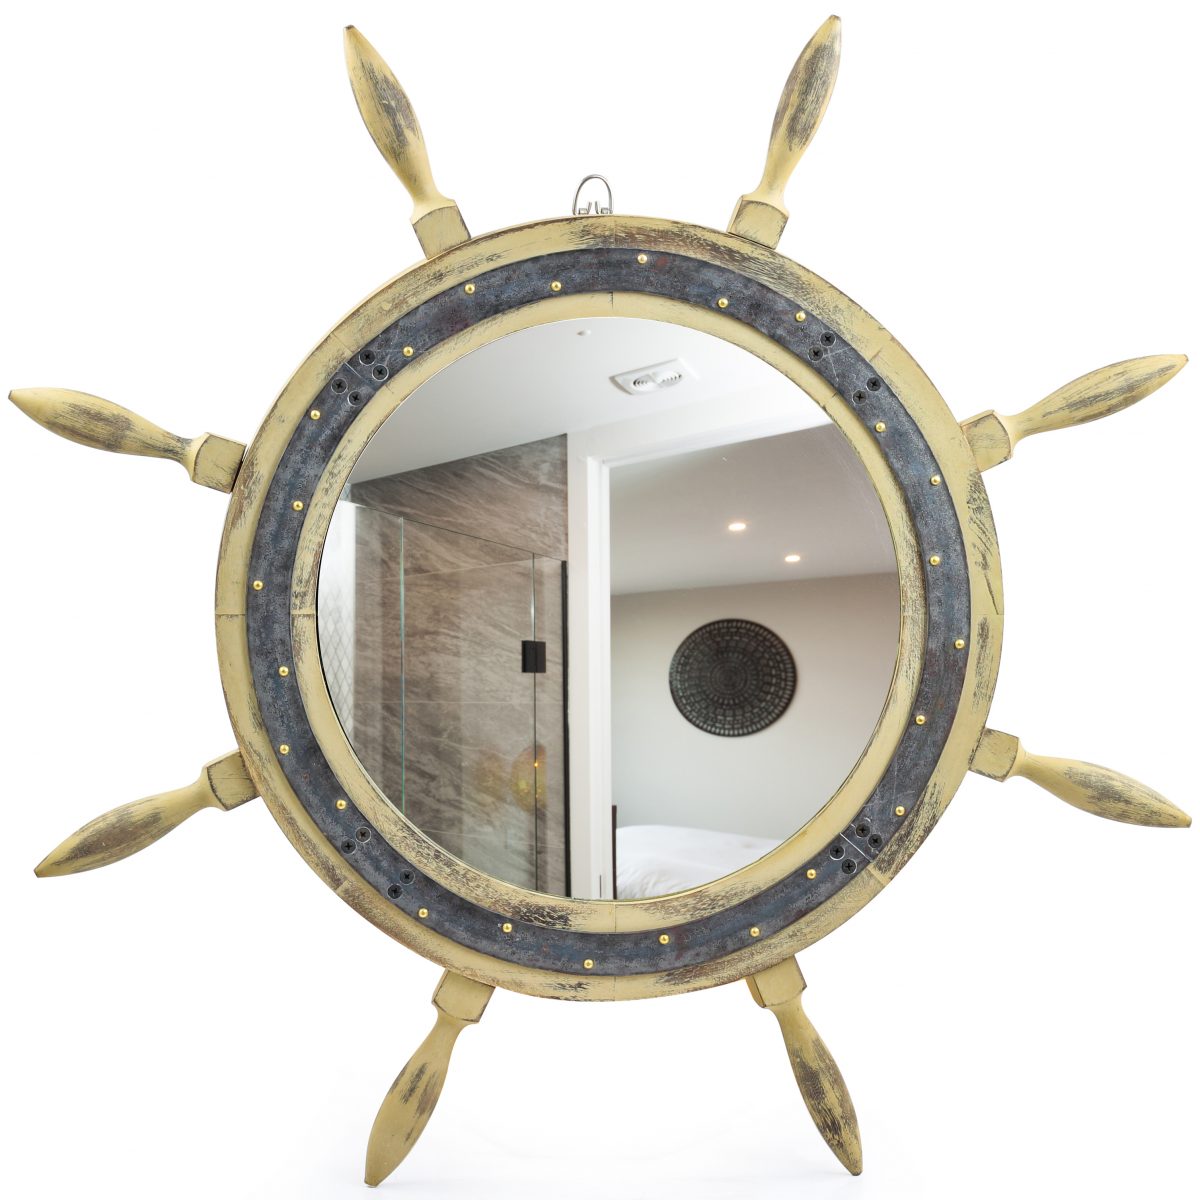 Nagina International 28" Ship Wheel Antique Rustic Off-White Iron Strip Textured Rudder | Nautical Pirate's Gift Idea | Costal & Beach Themed Room Wall Sculpture | Bathroom Mirror